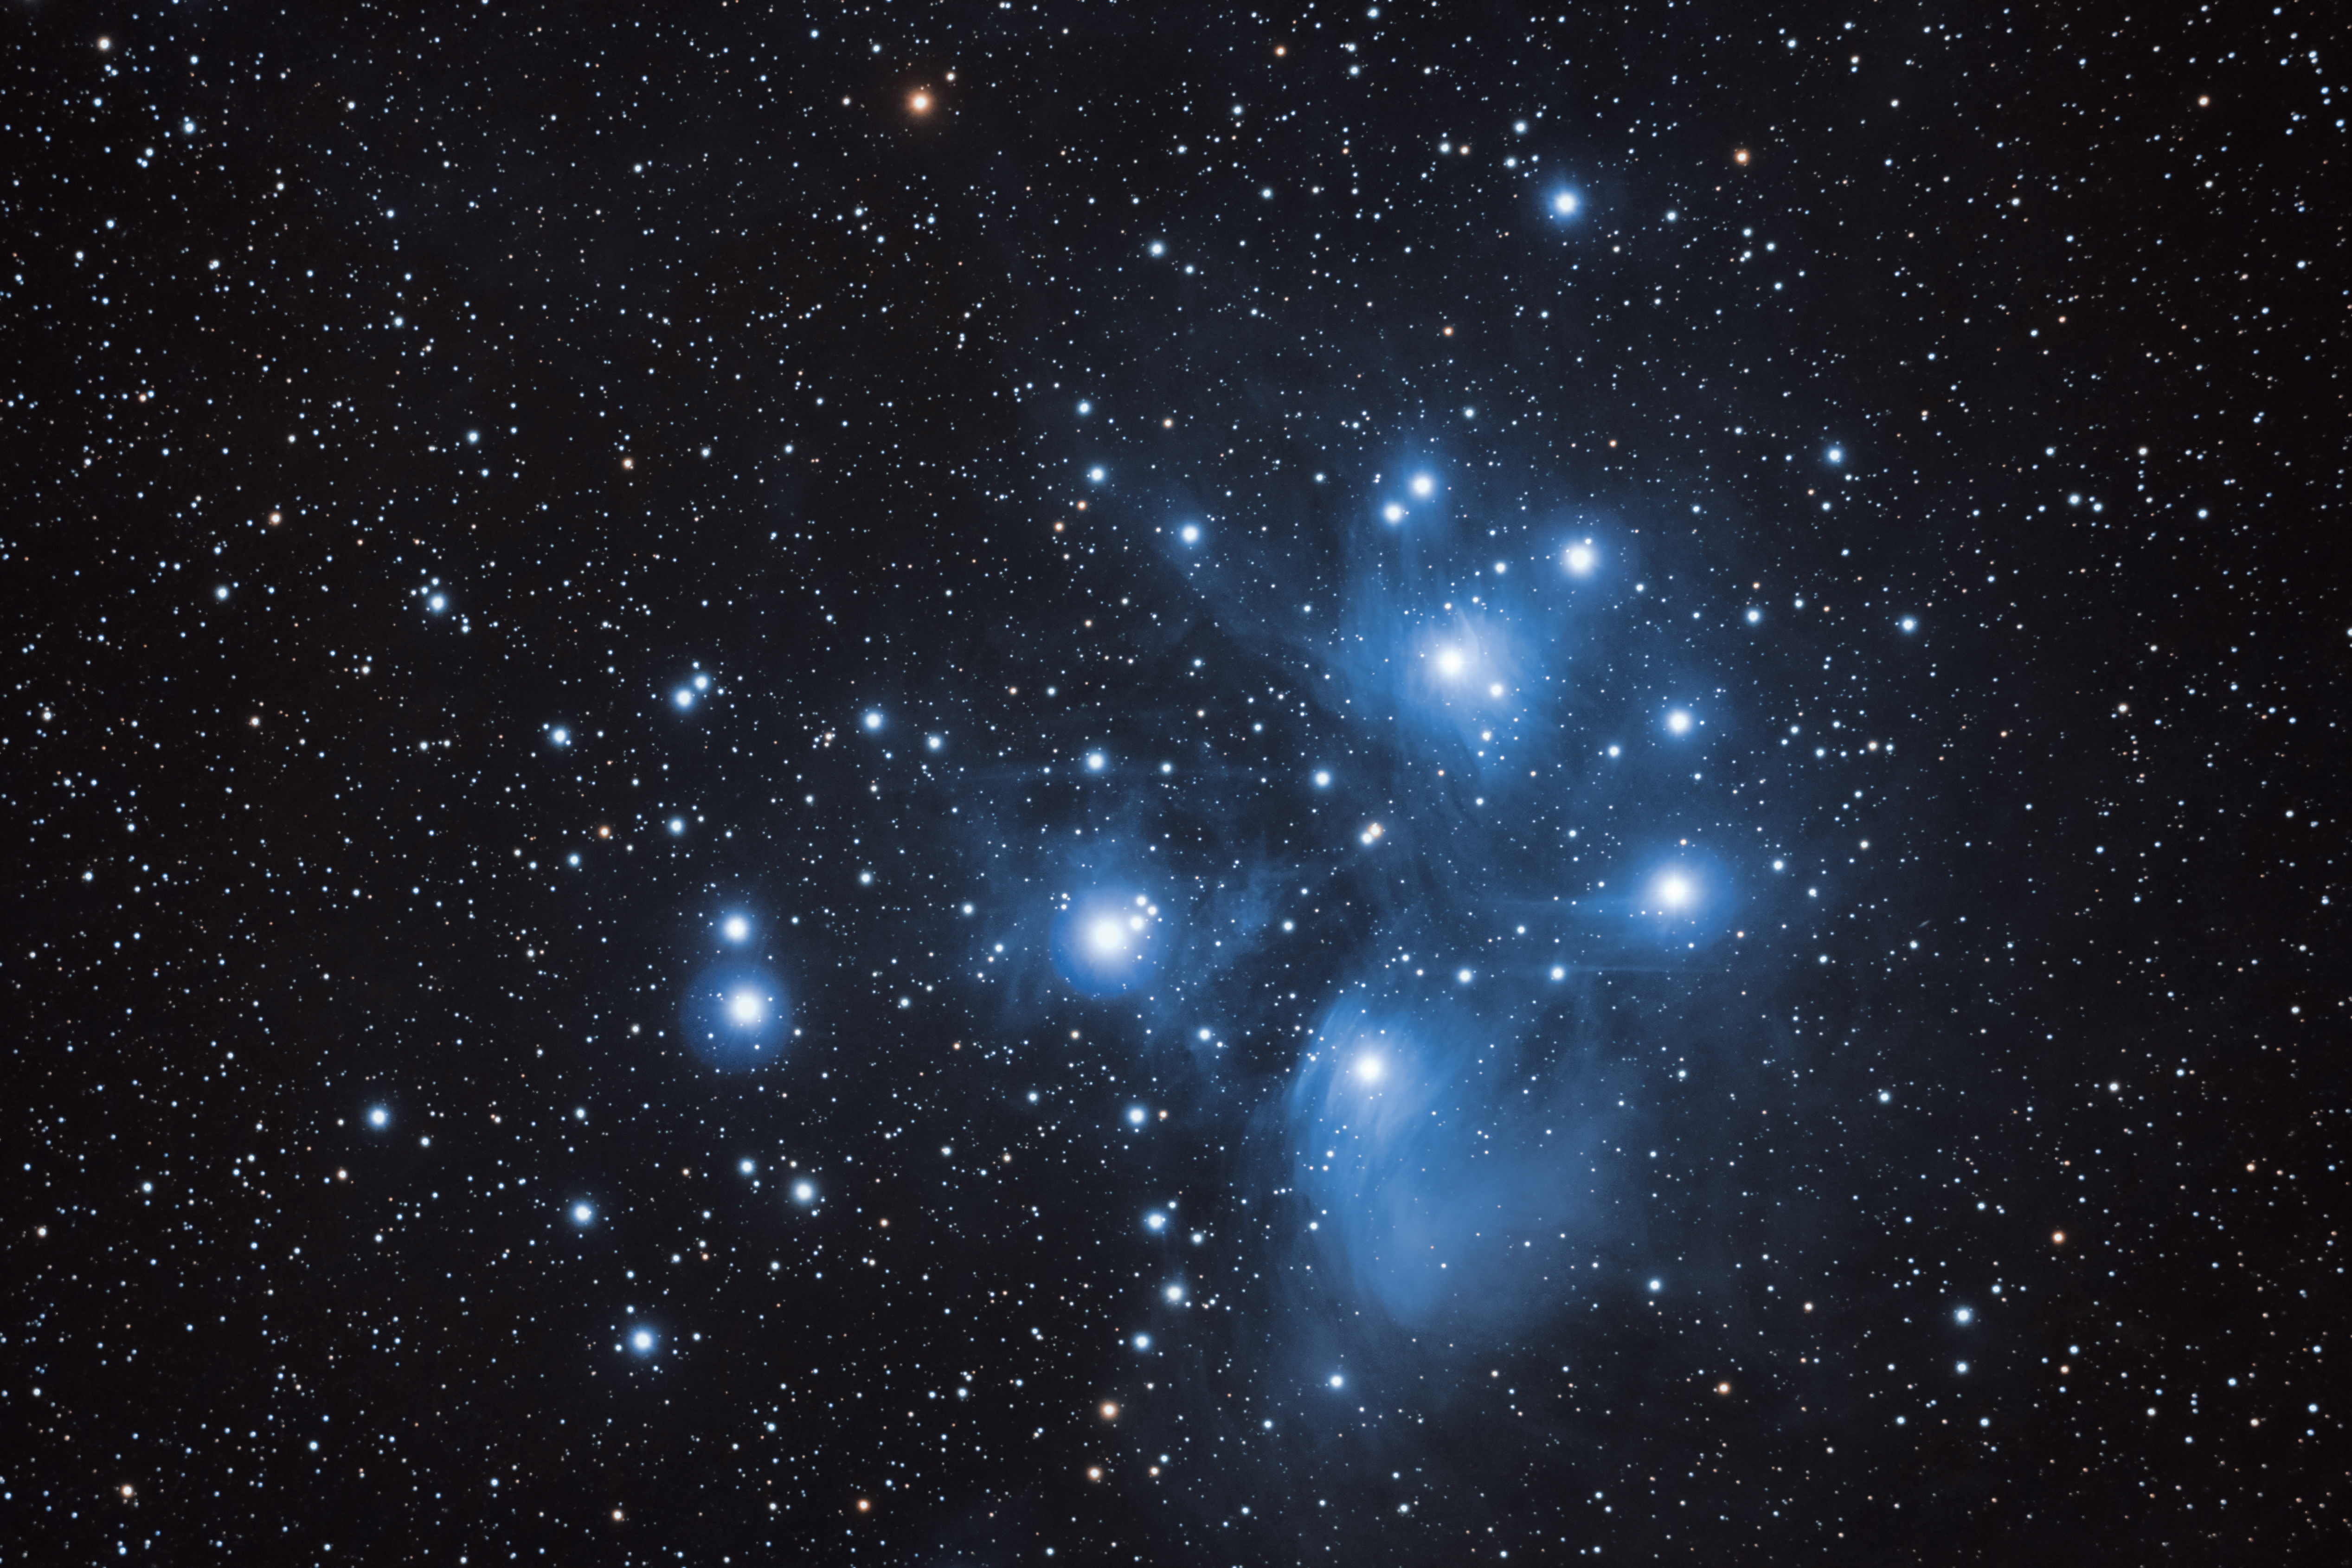 star cluster wallpaper hd